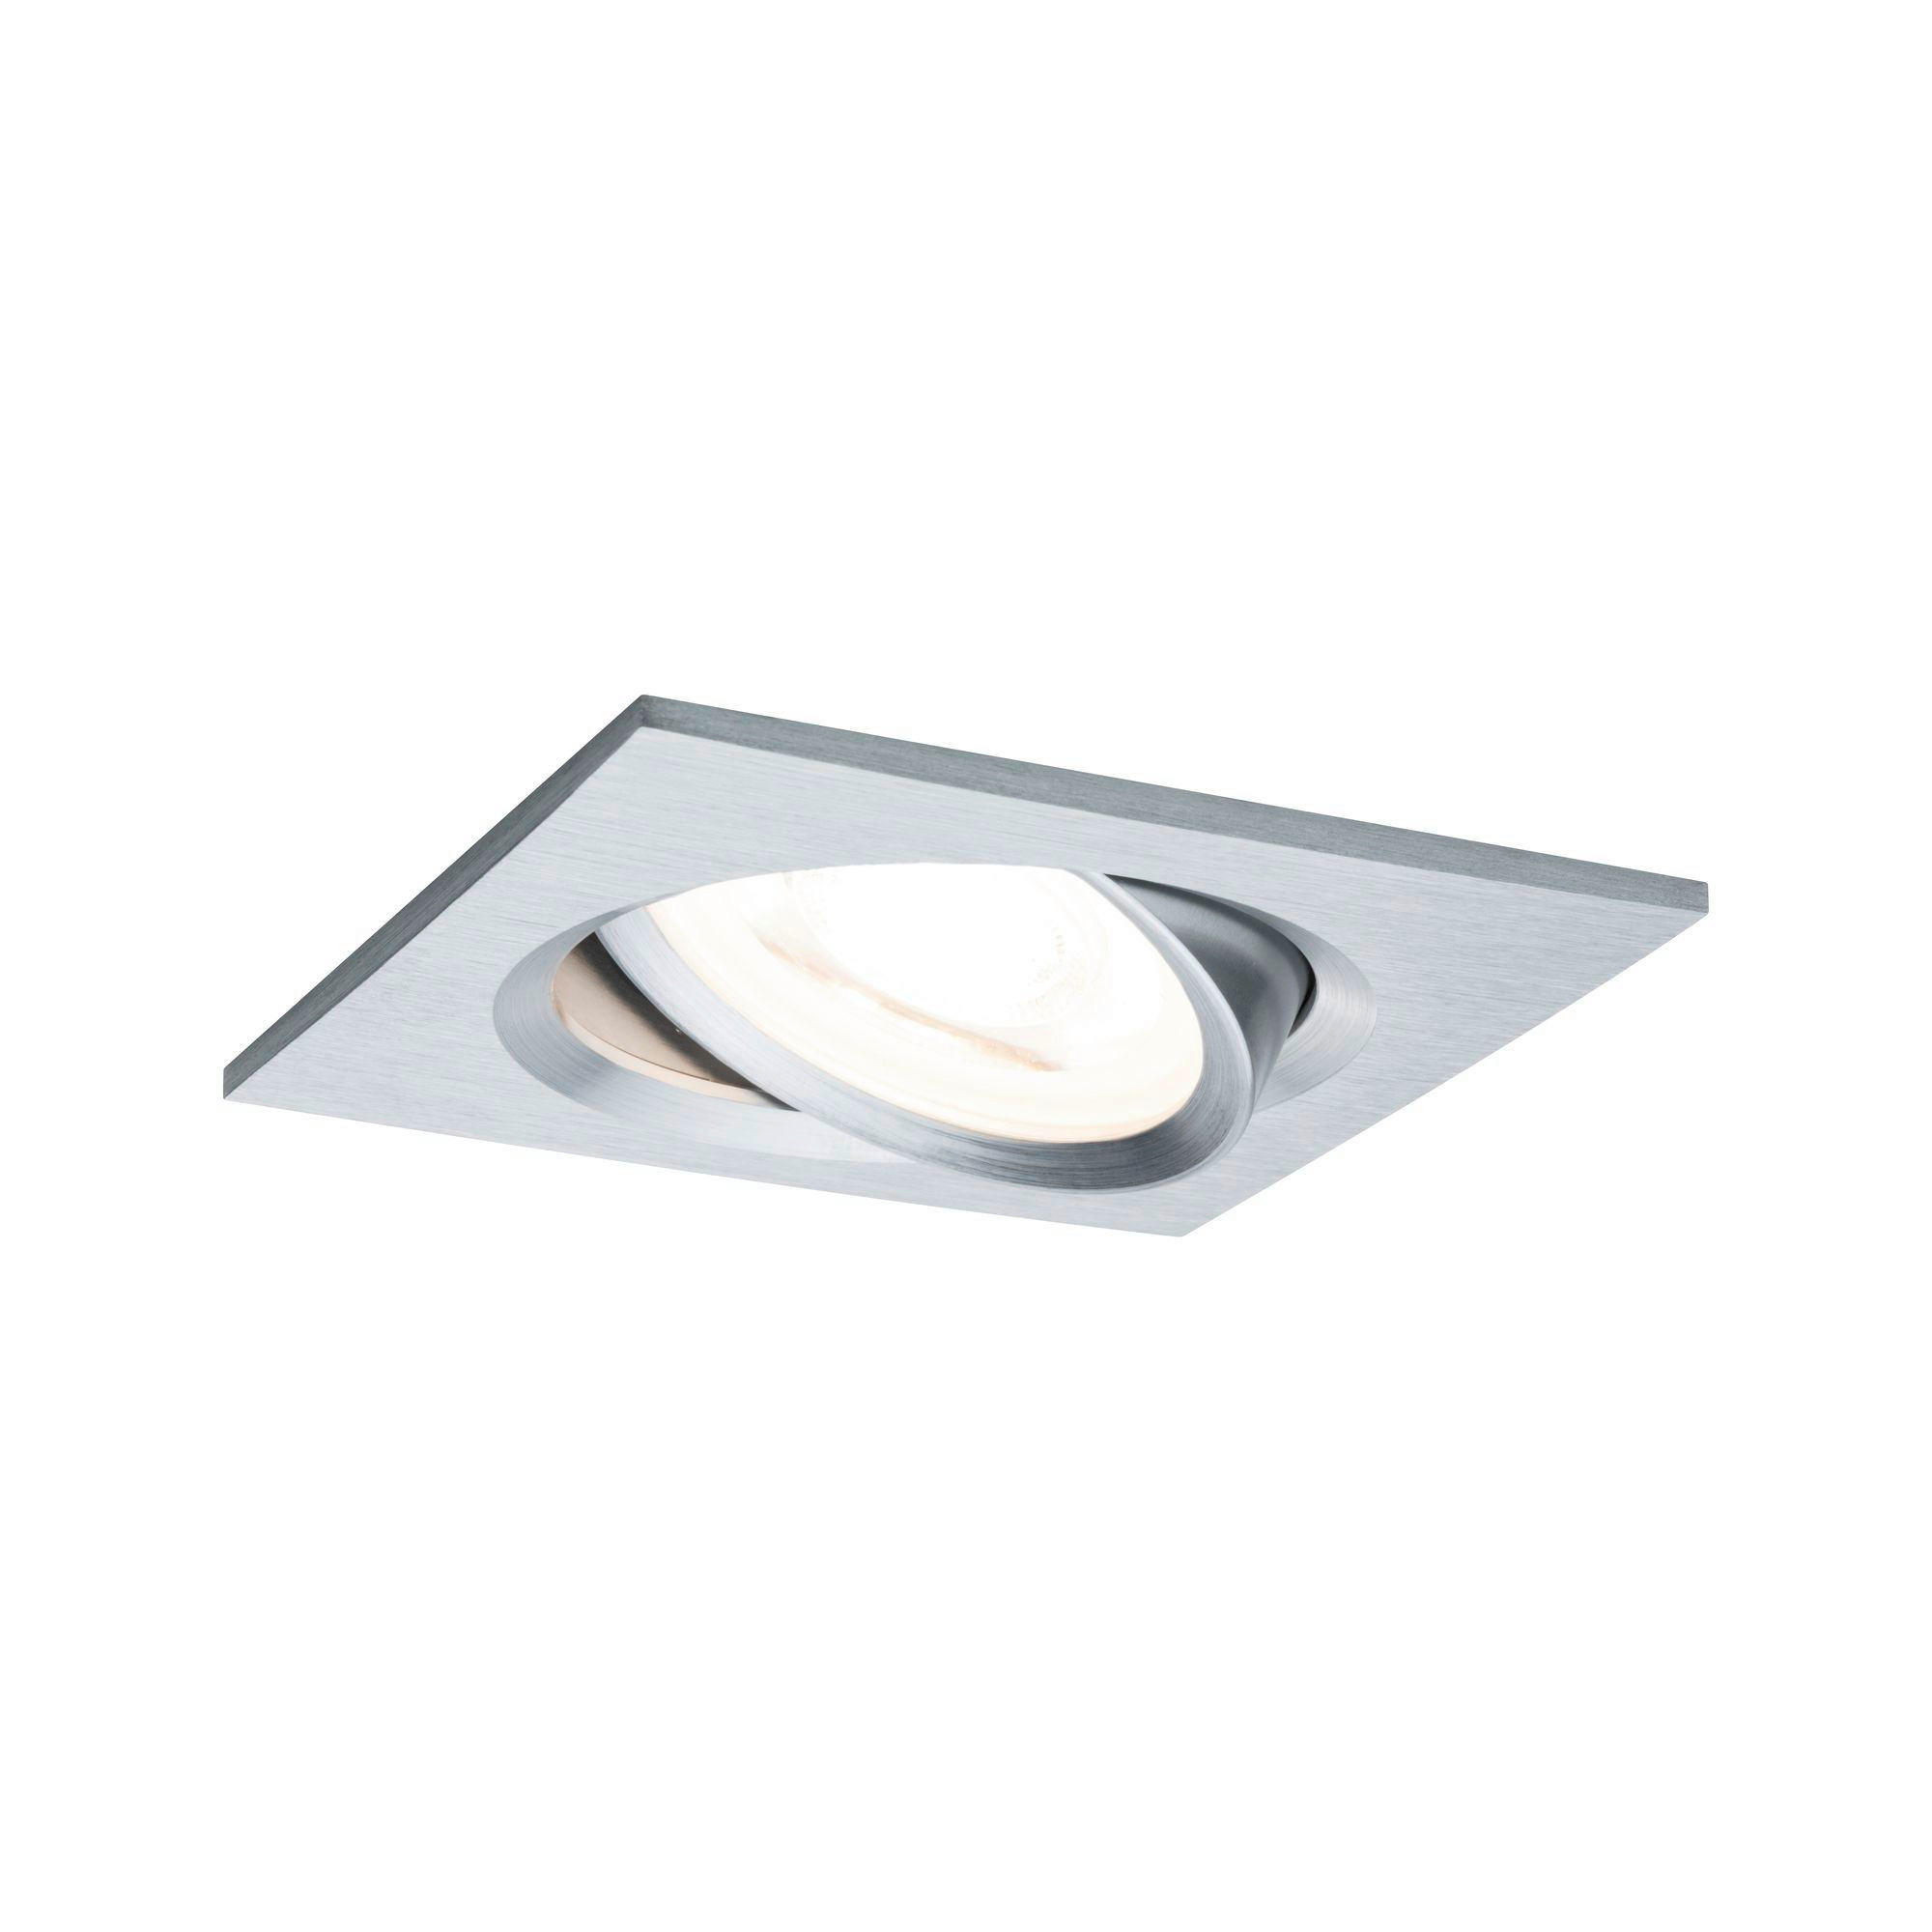 LED-DECKENLEUCHTE 8,4/8,4 cm   - Alufarben, Basics, Metall (8,4/8,4cm) - Paulmann